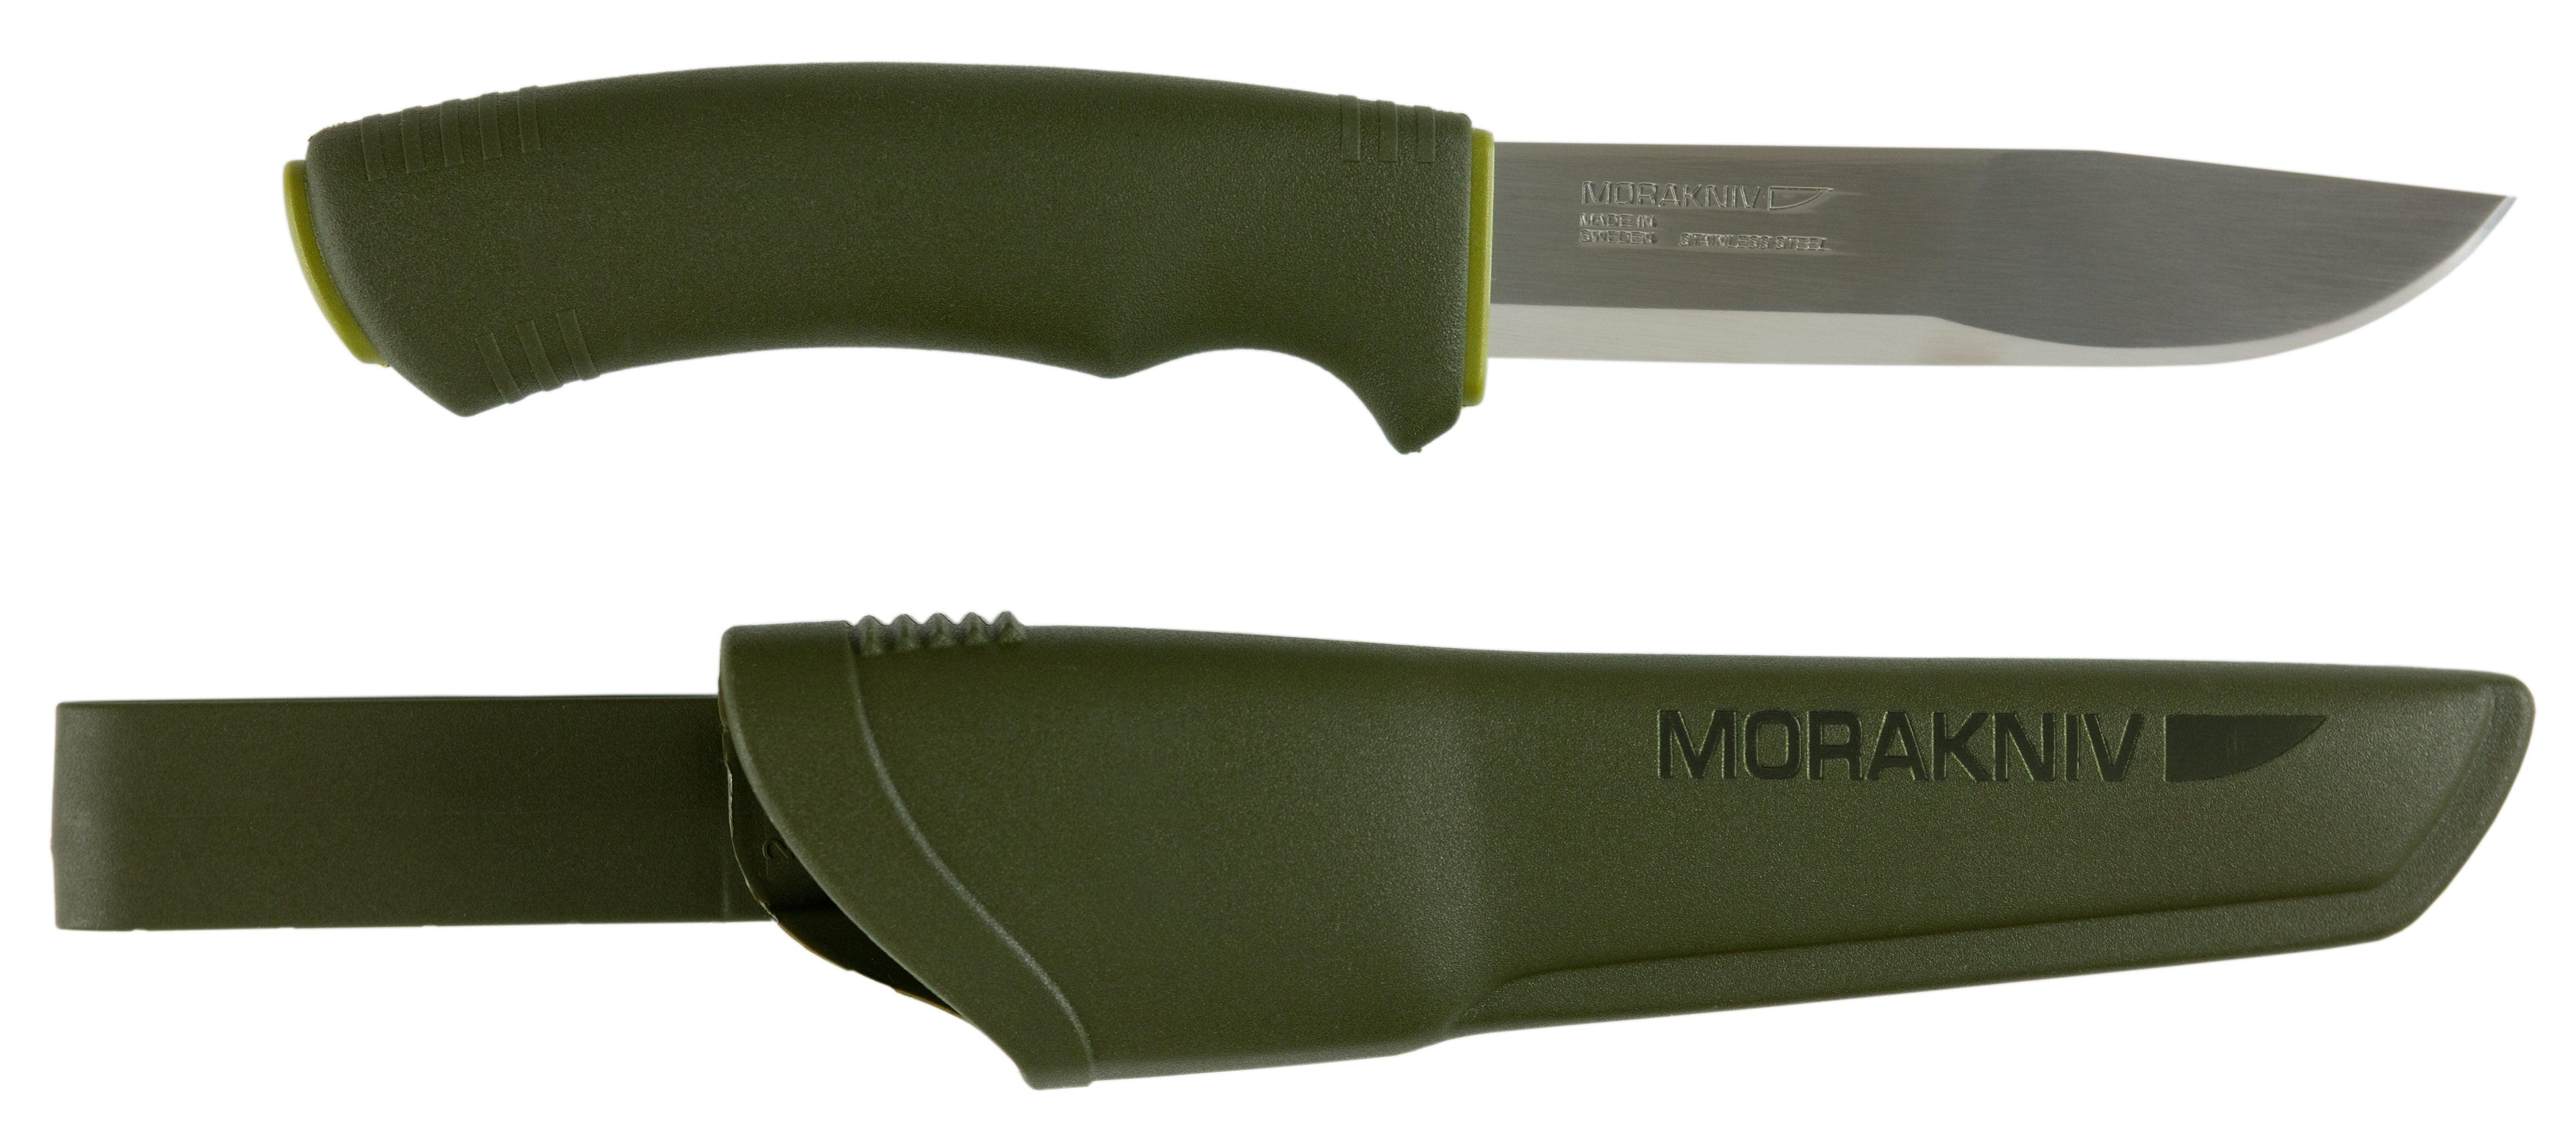 Morakniv® Bushcraft Stainless Knife with Plastic Sheath - Trusted Gear Company LLC